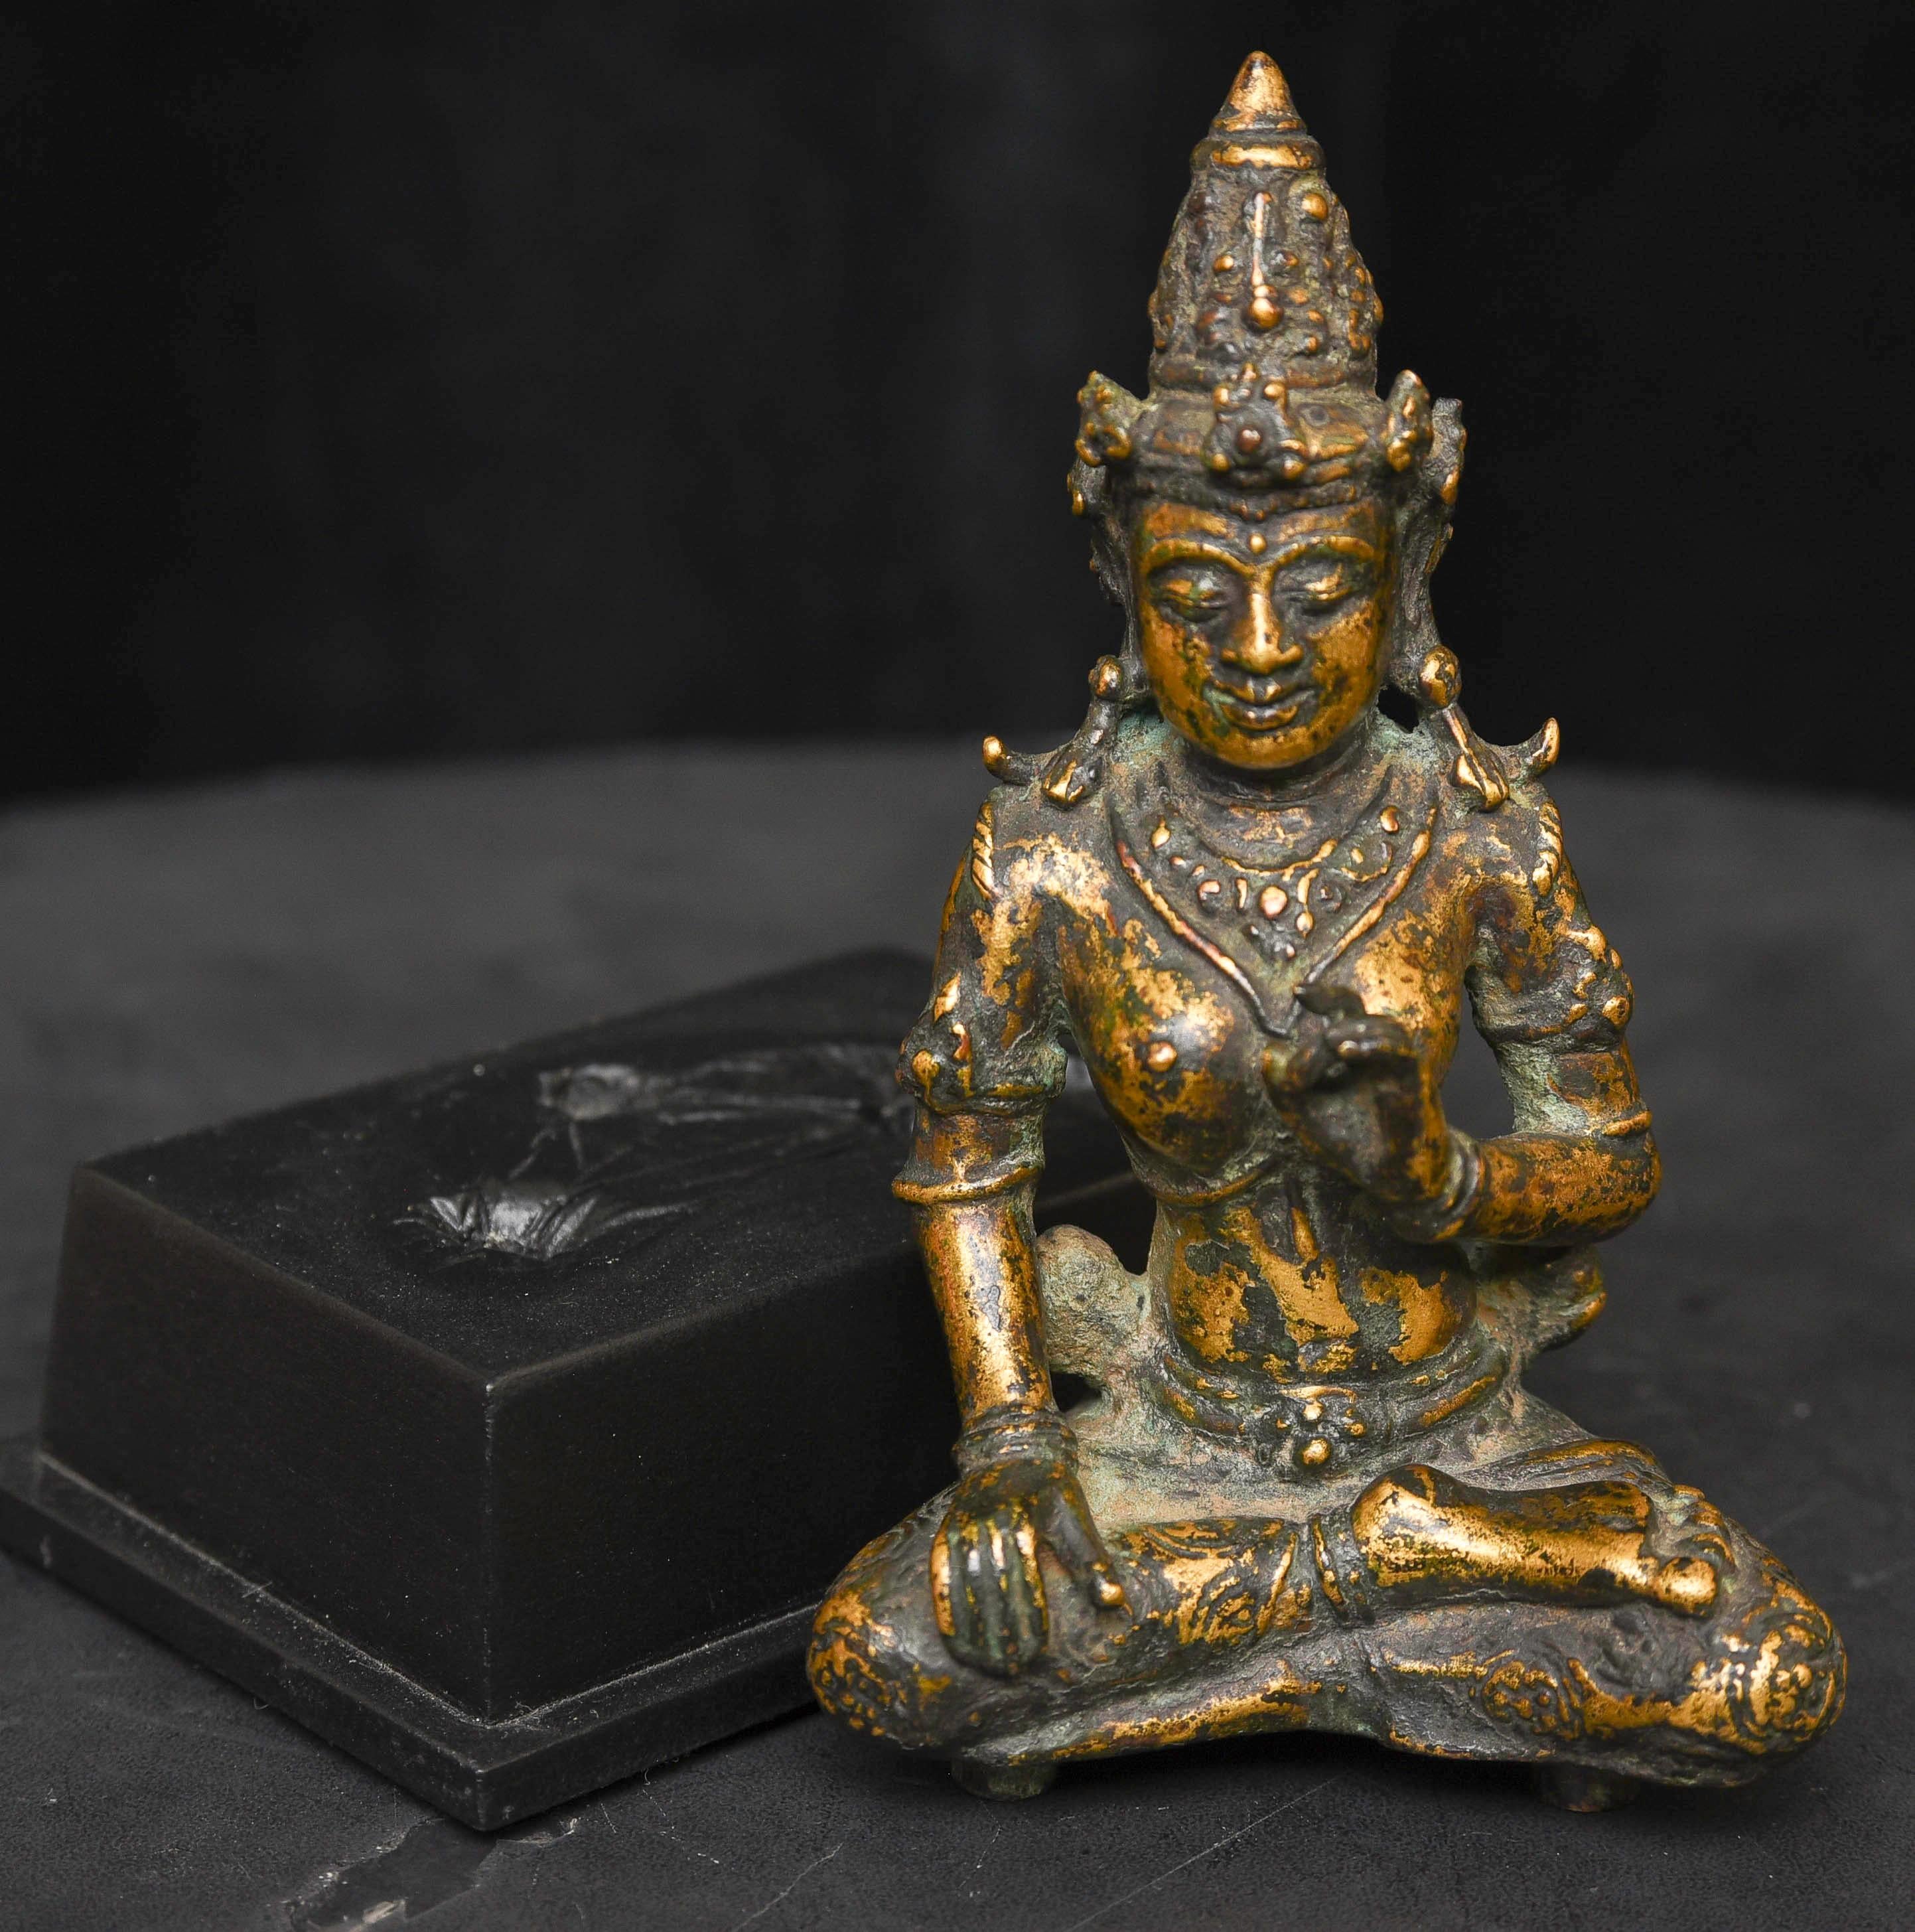 15-19thC Indonesian or Javanese Gilt Bronze Deities - 9591 In Good Condition For Sale In Ukiah, CA